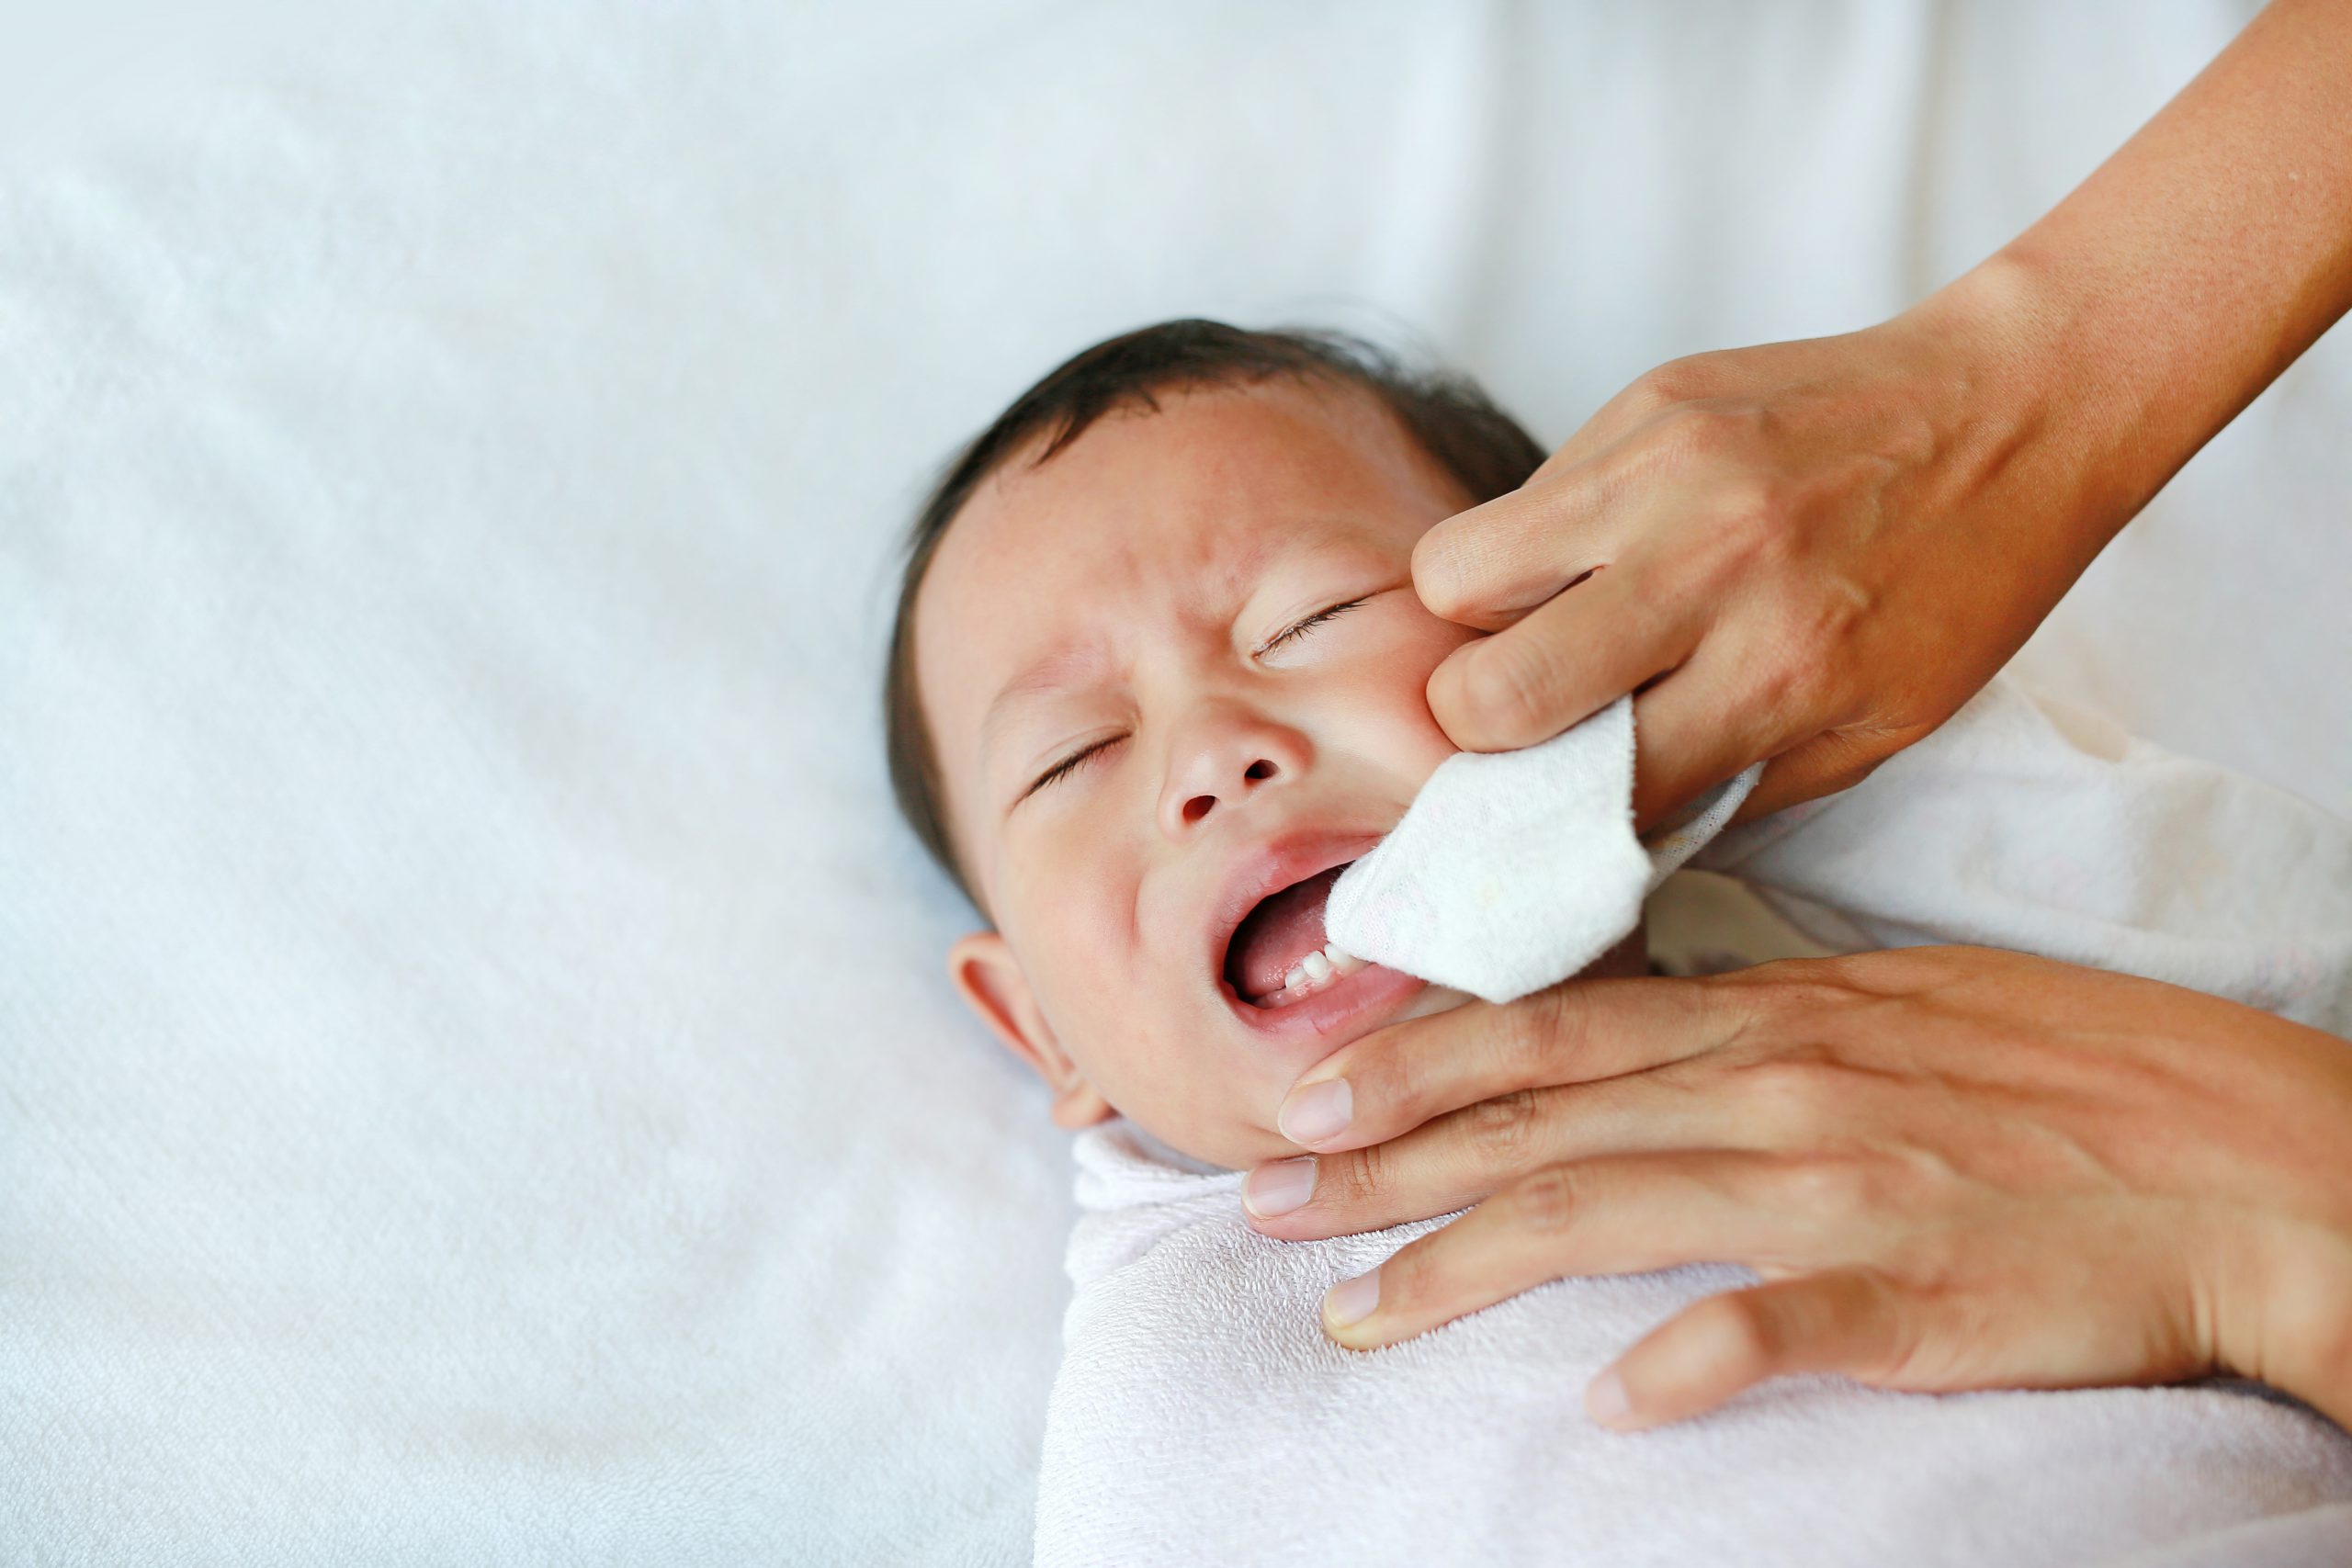 cara mengatasi hidung tersumbat pada bayi